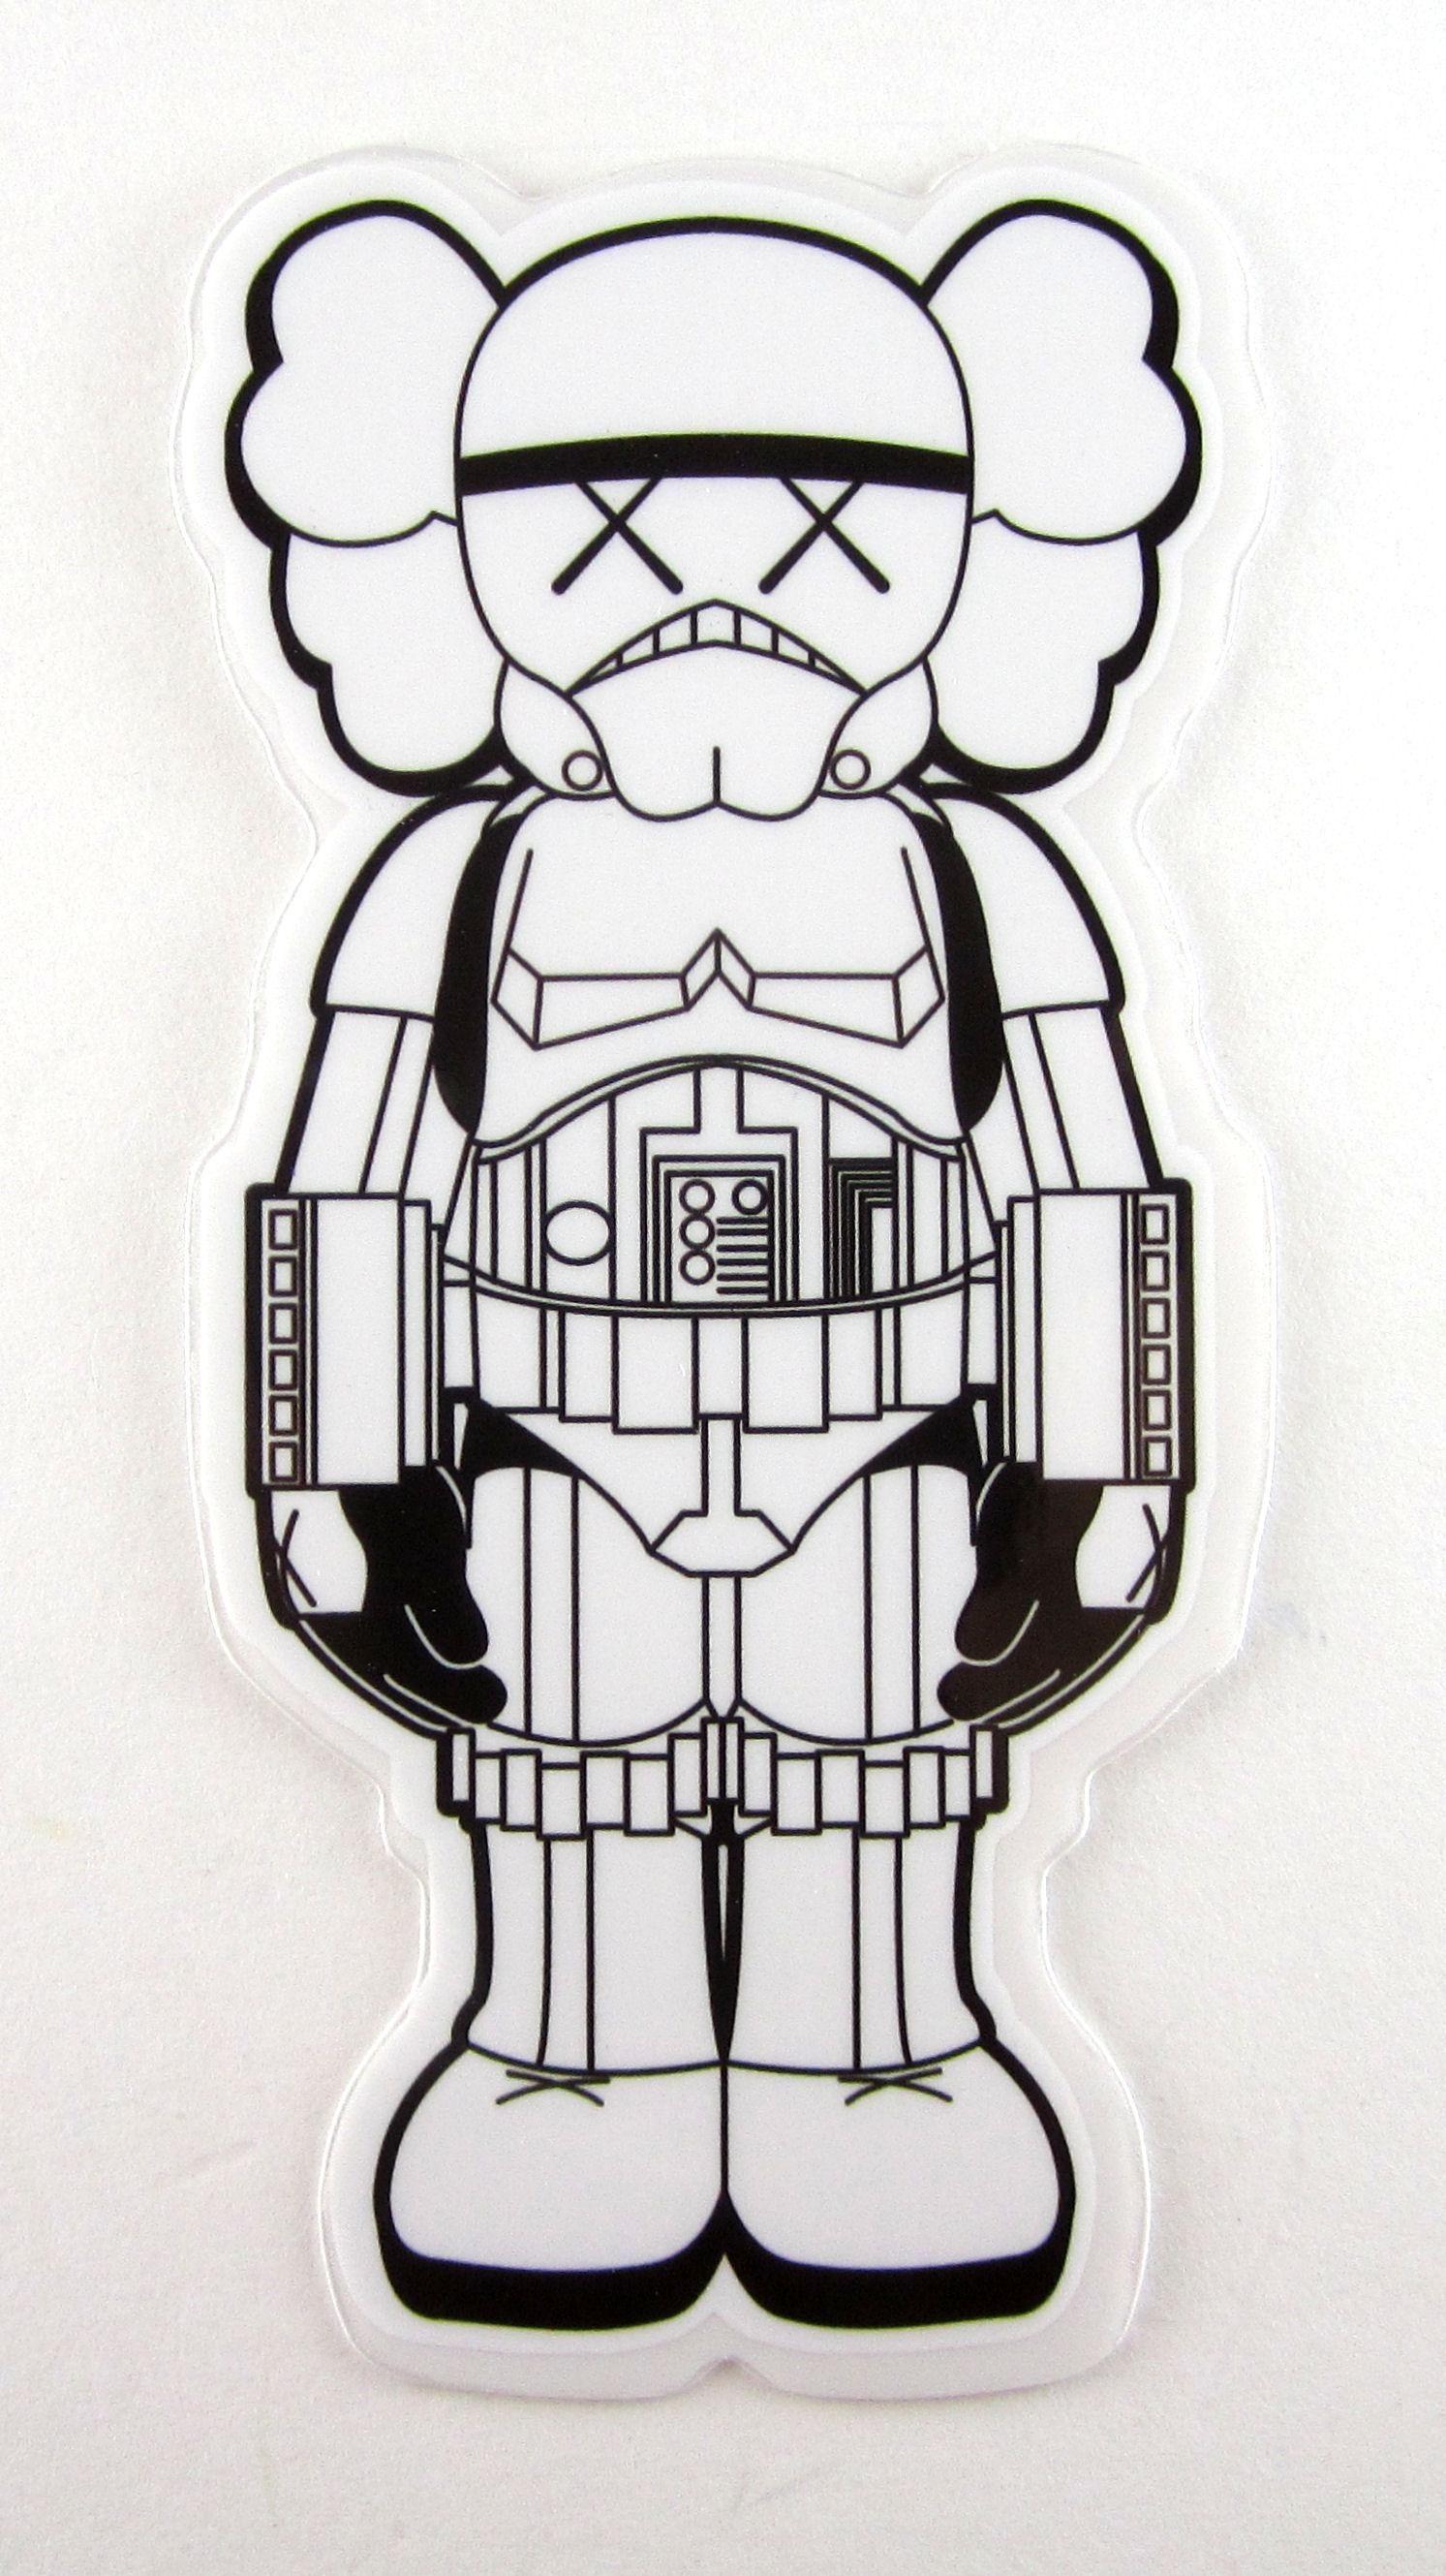 stormtrooper Companion sticker by KAWS Original Fake